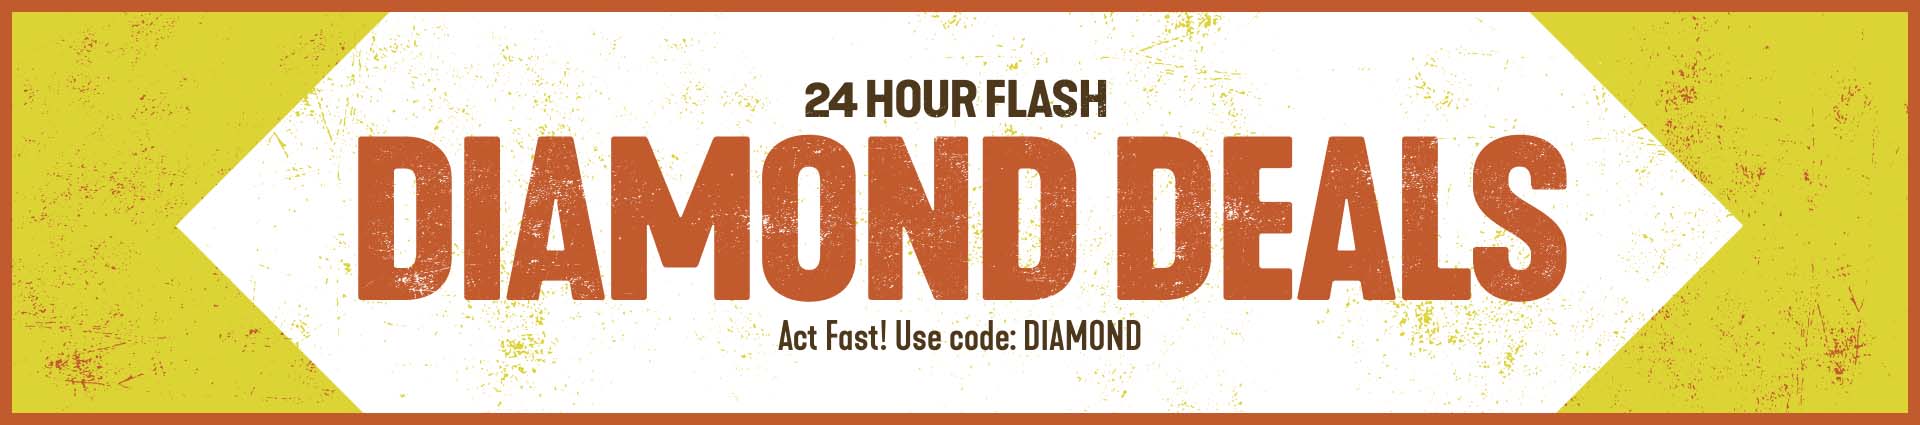 24 Hour Flash Diamond Deals. Act Fast! Use Code: DIAMOND